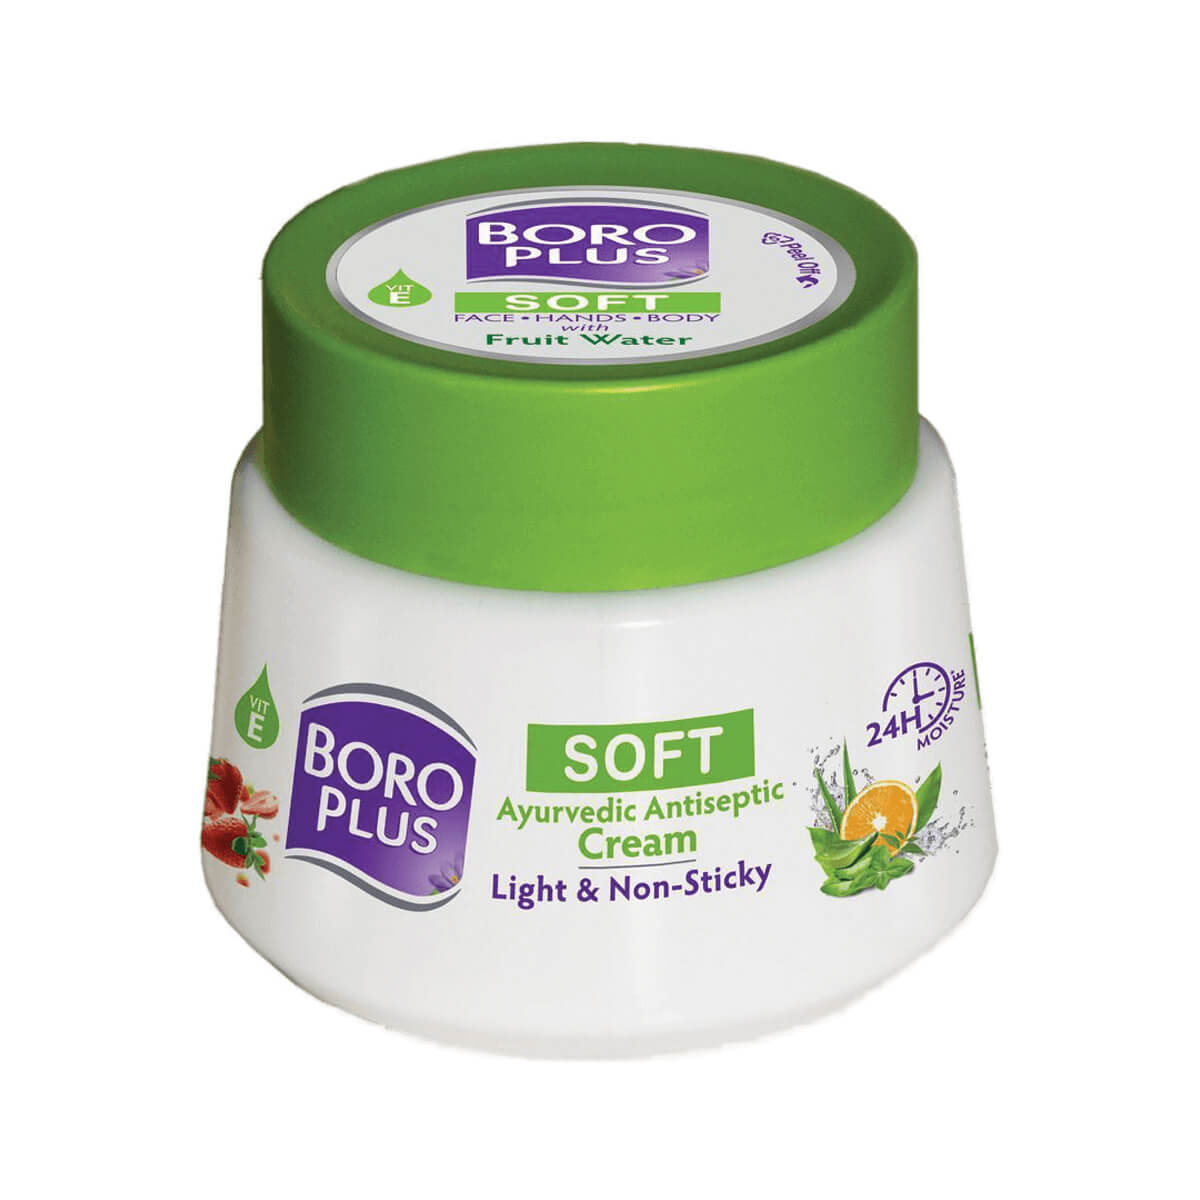 BoroPlus Soft Ayurvedic Antiseptic Cream (25ml)